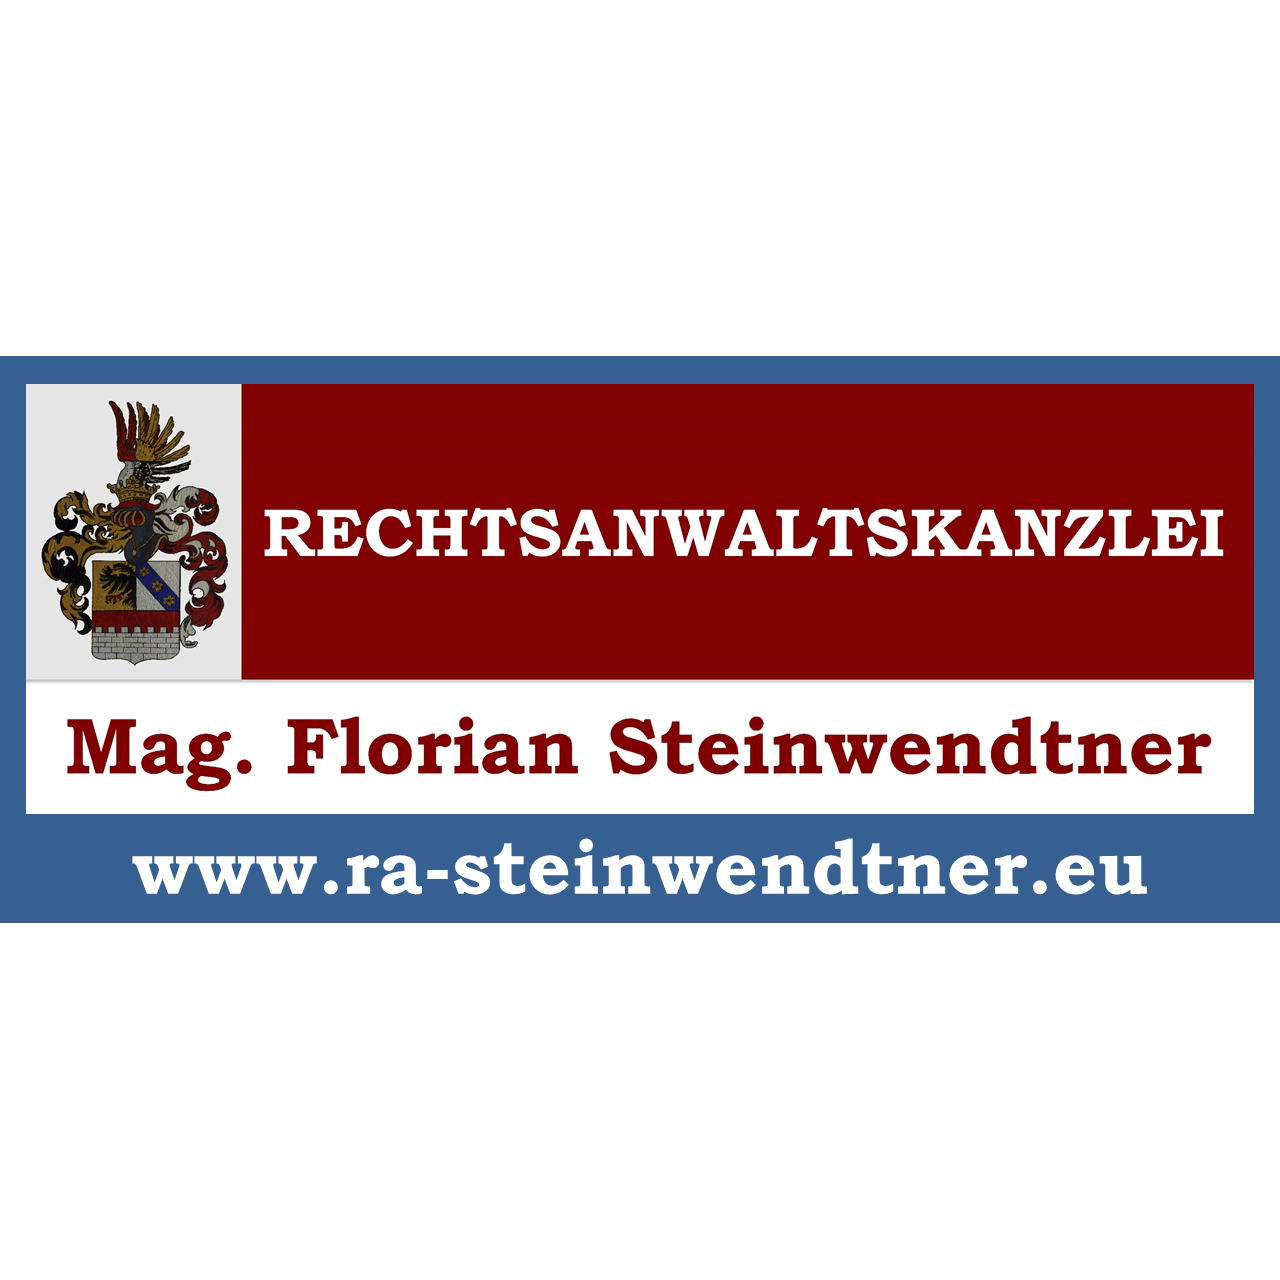 Rechtsanwaltskanzlei - Mag. Florian Steinwendtner  - LOGO